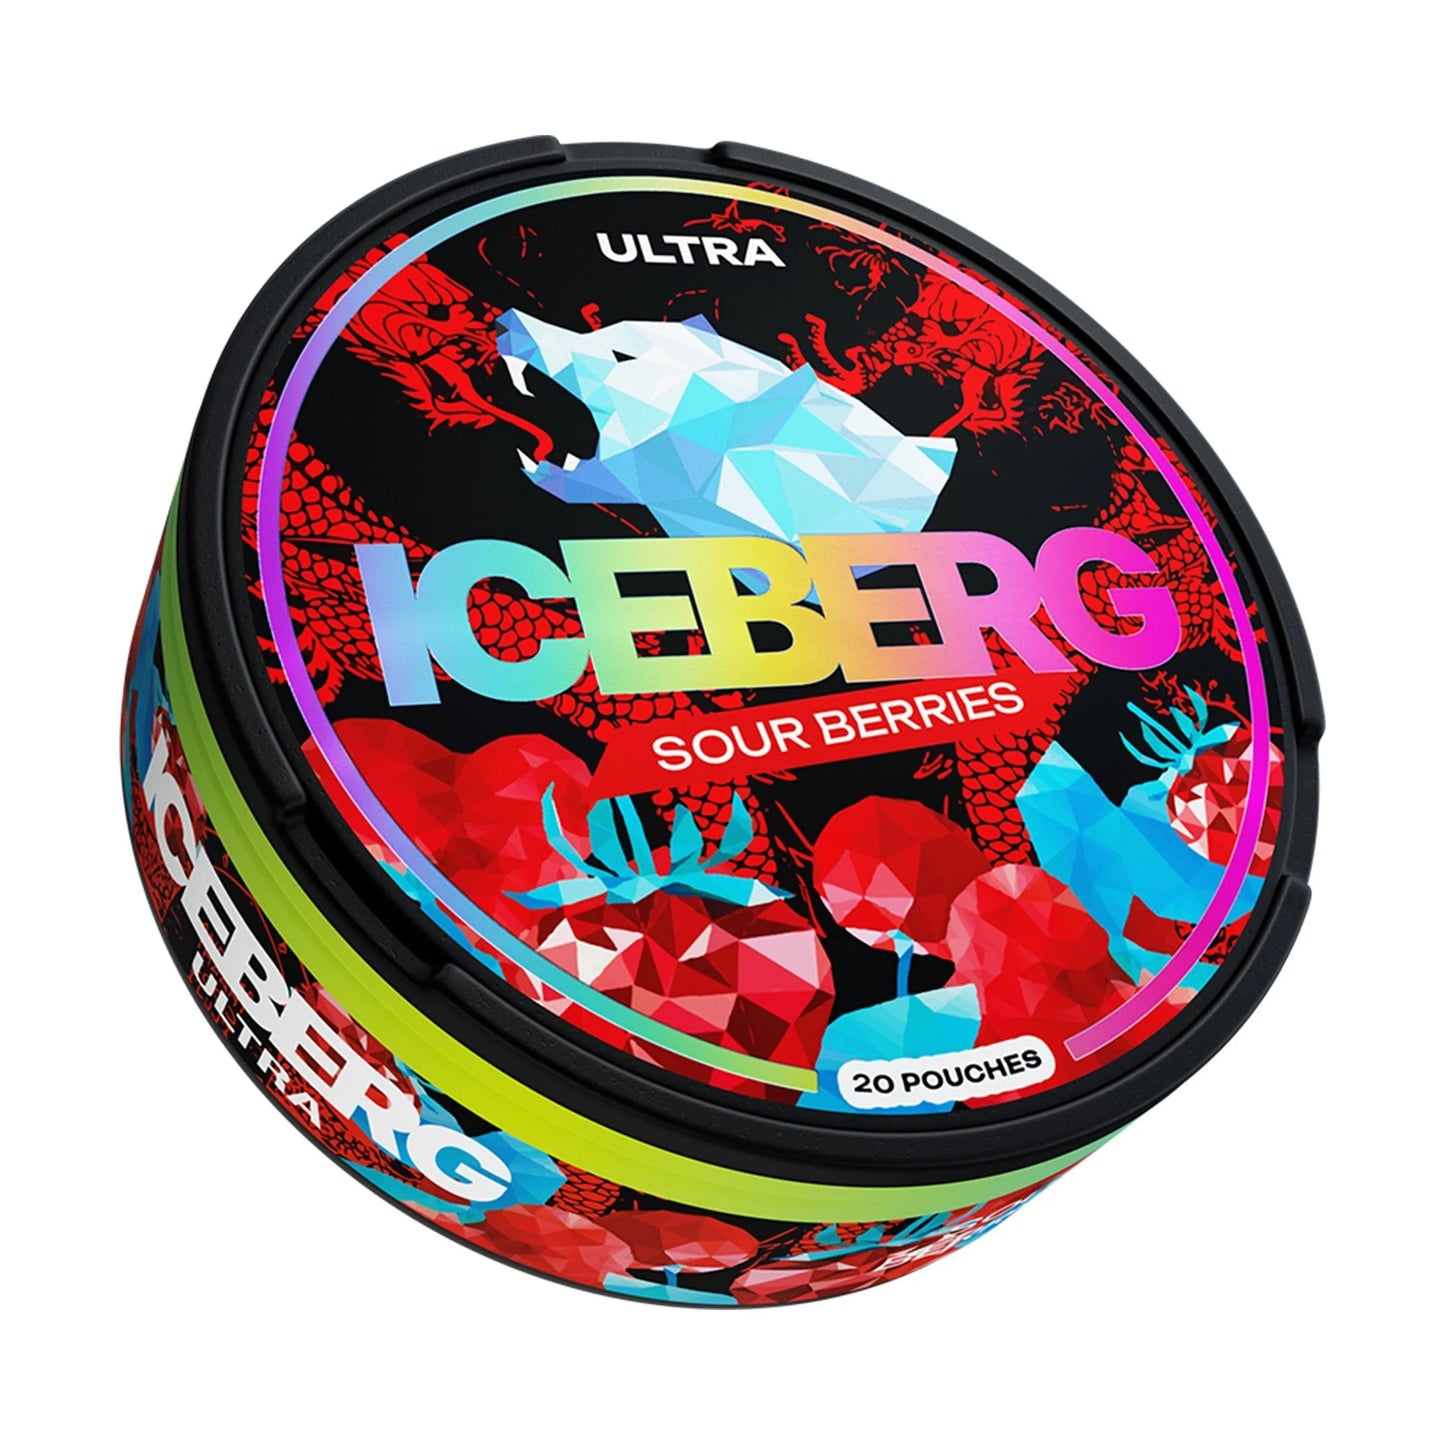 ICEBEREG Sour Berries - 50mg/g